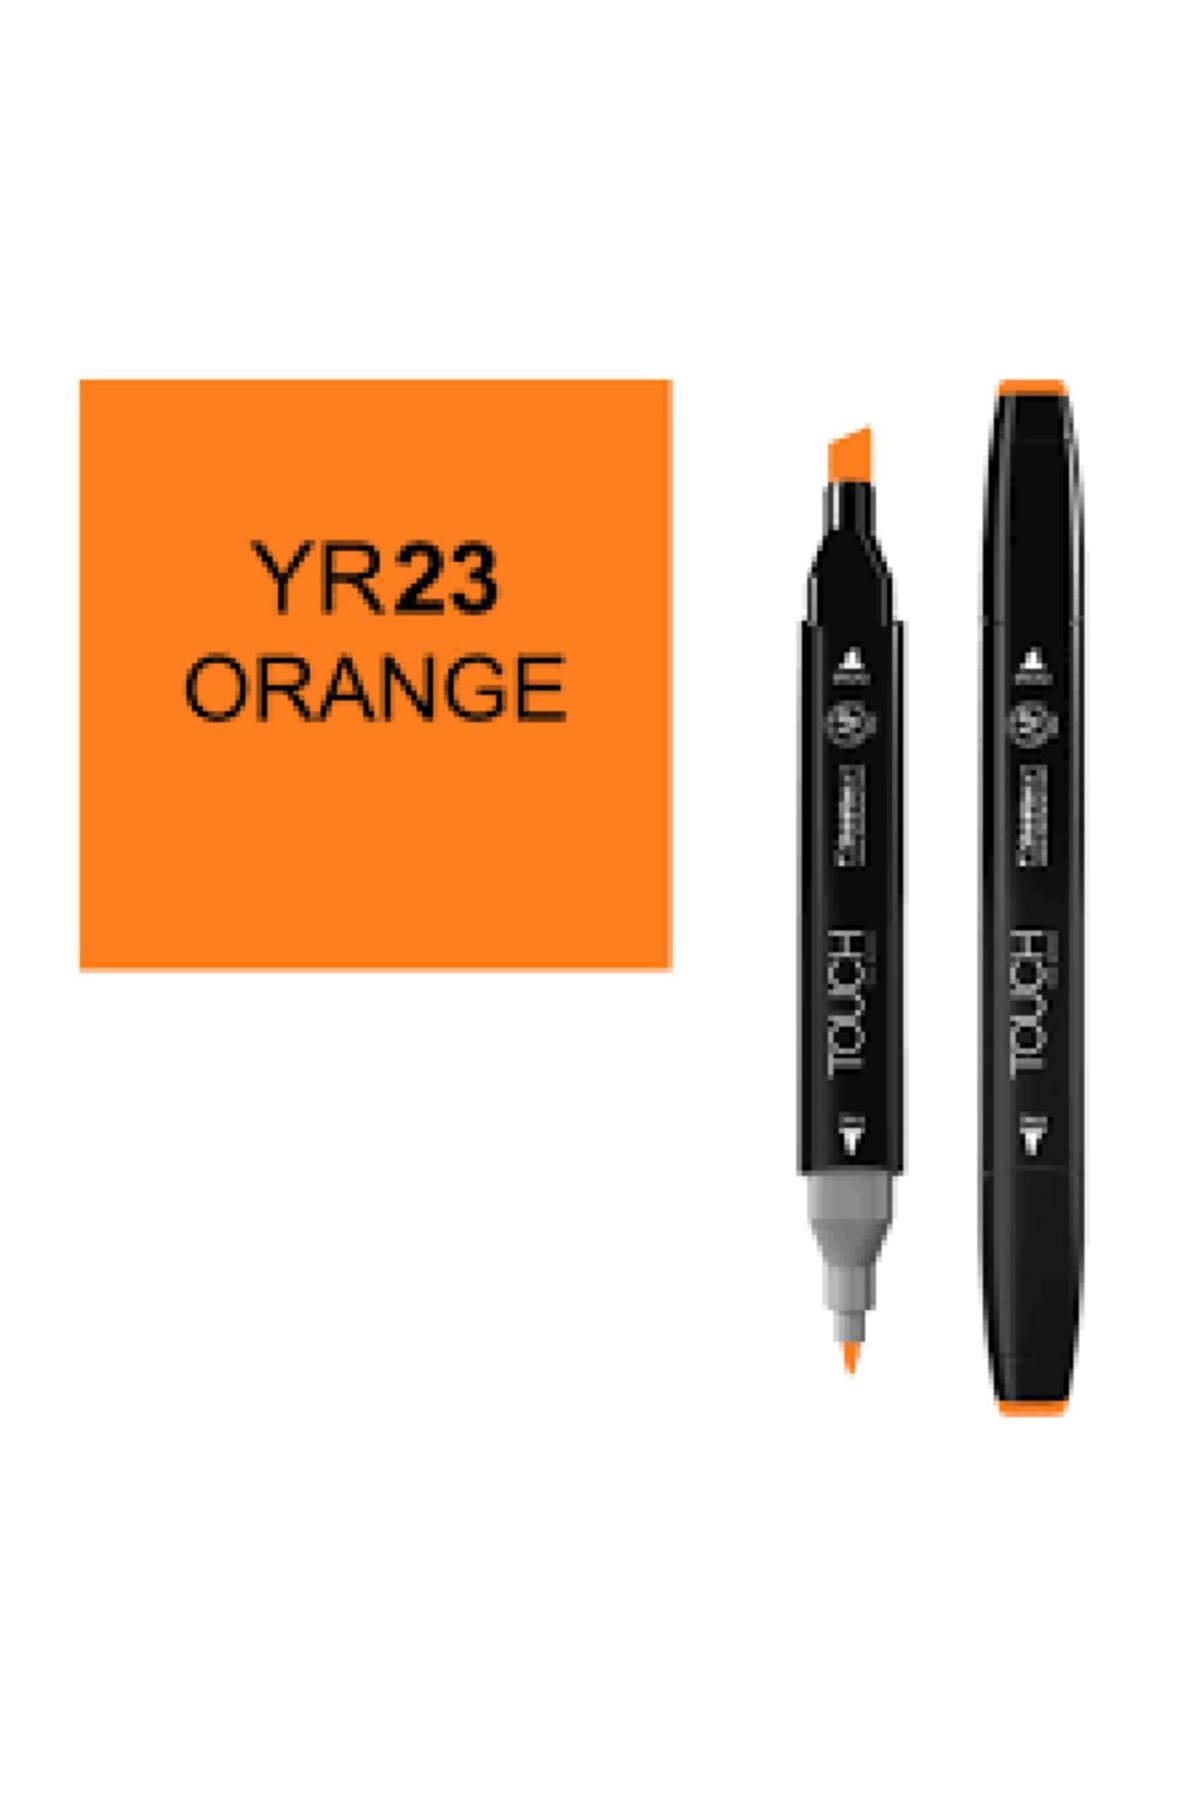 Ponart Touch Twin Yr23 Orange Marker Sh1110023